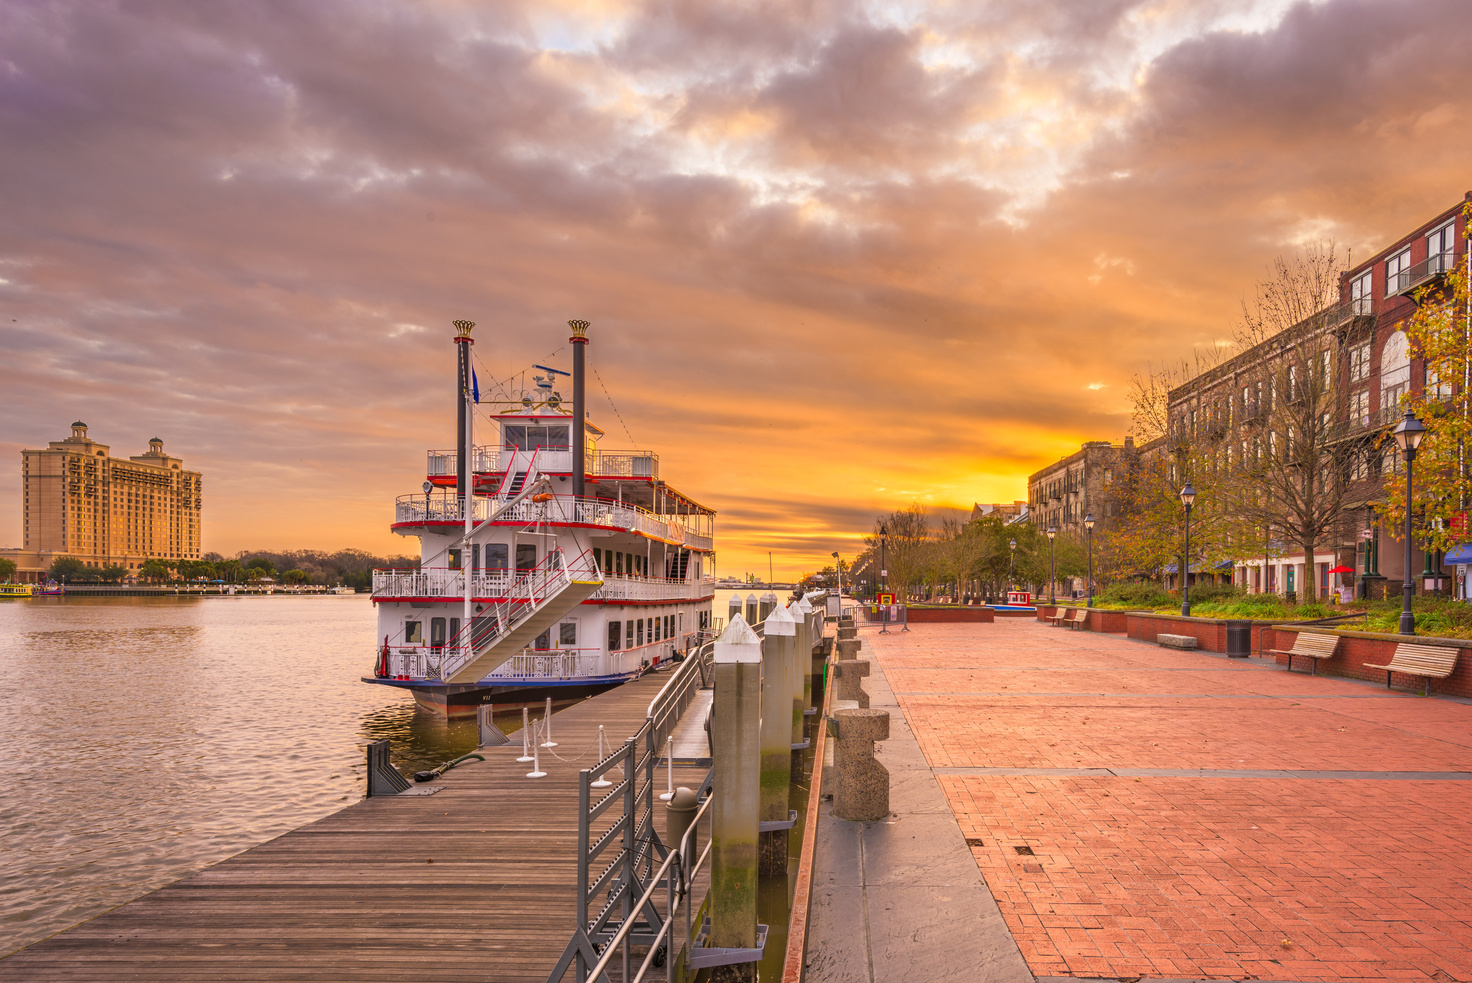 Savannah, Georgia, USA on the River